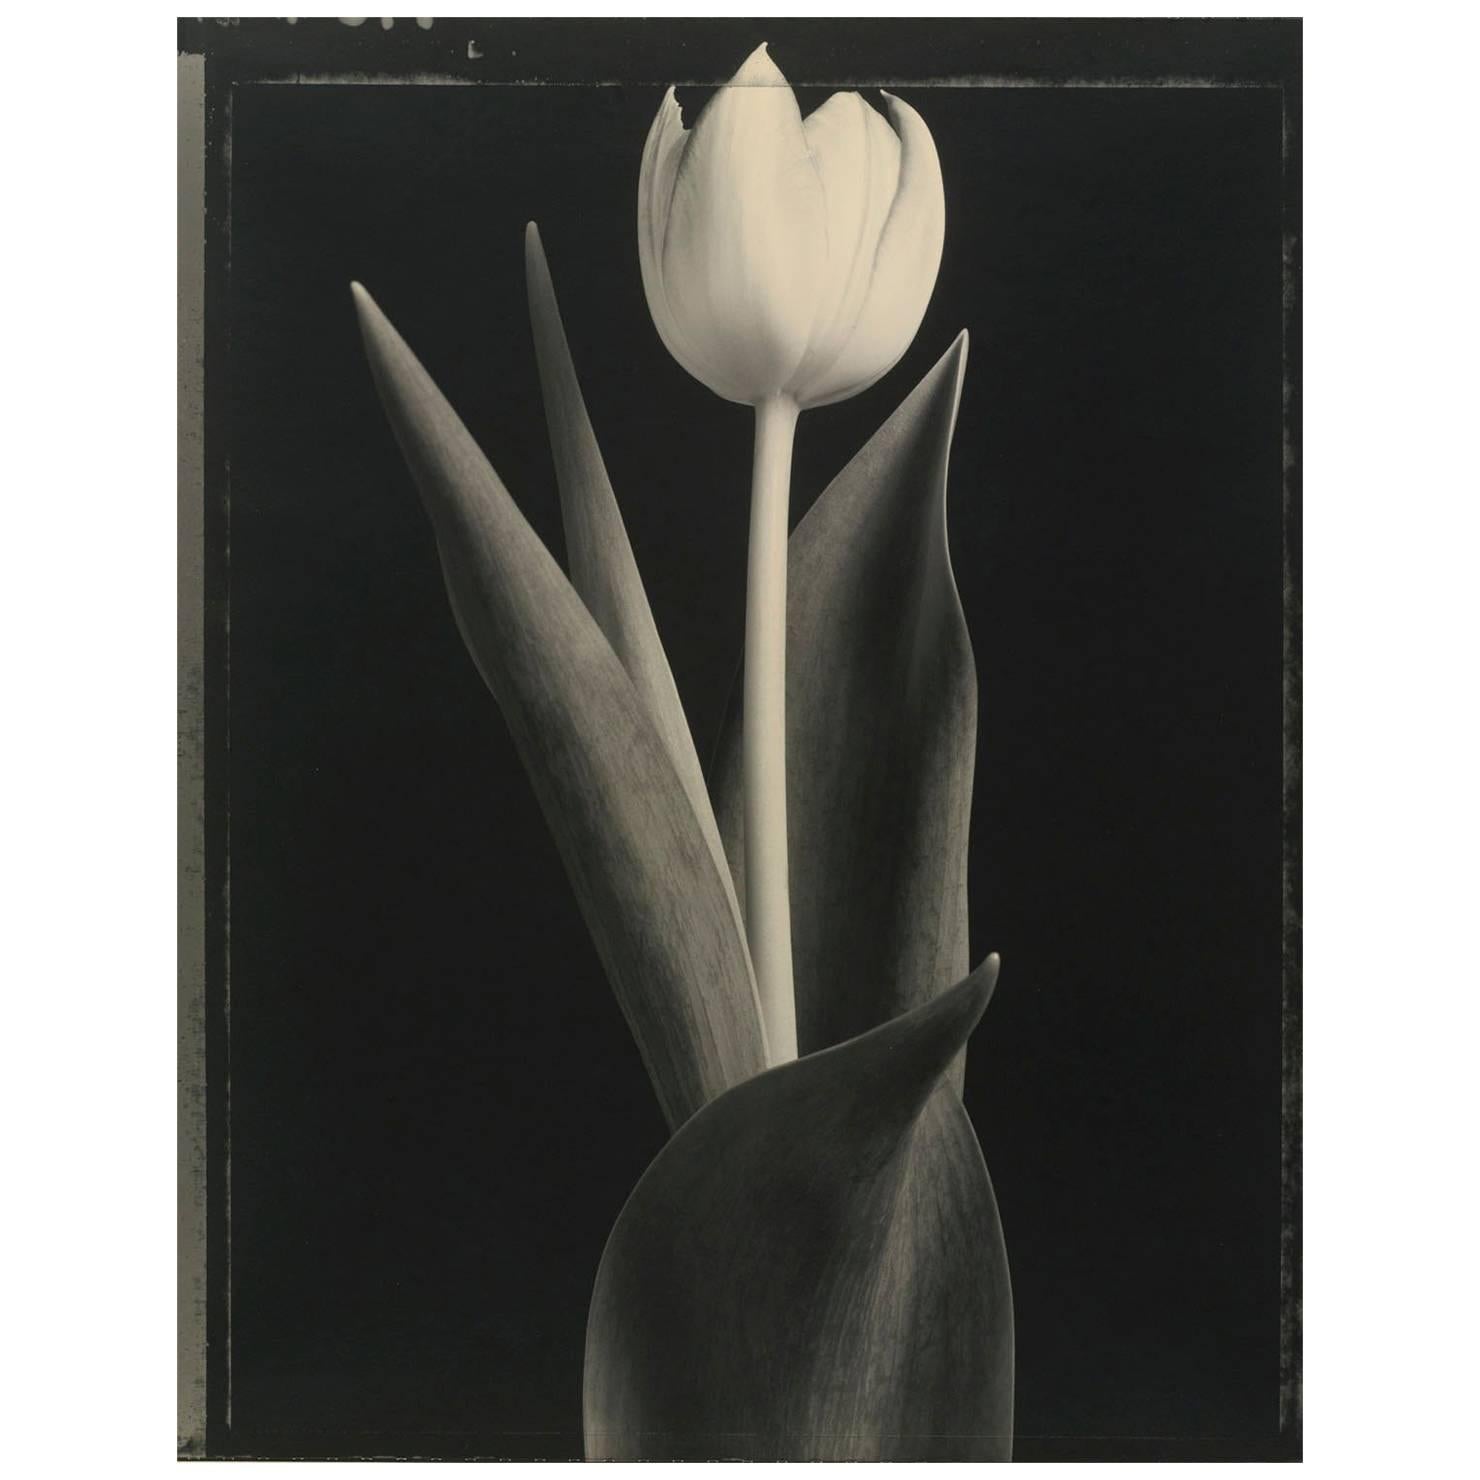 Tom Baril "Tulip" Photograph